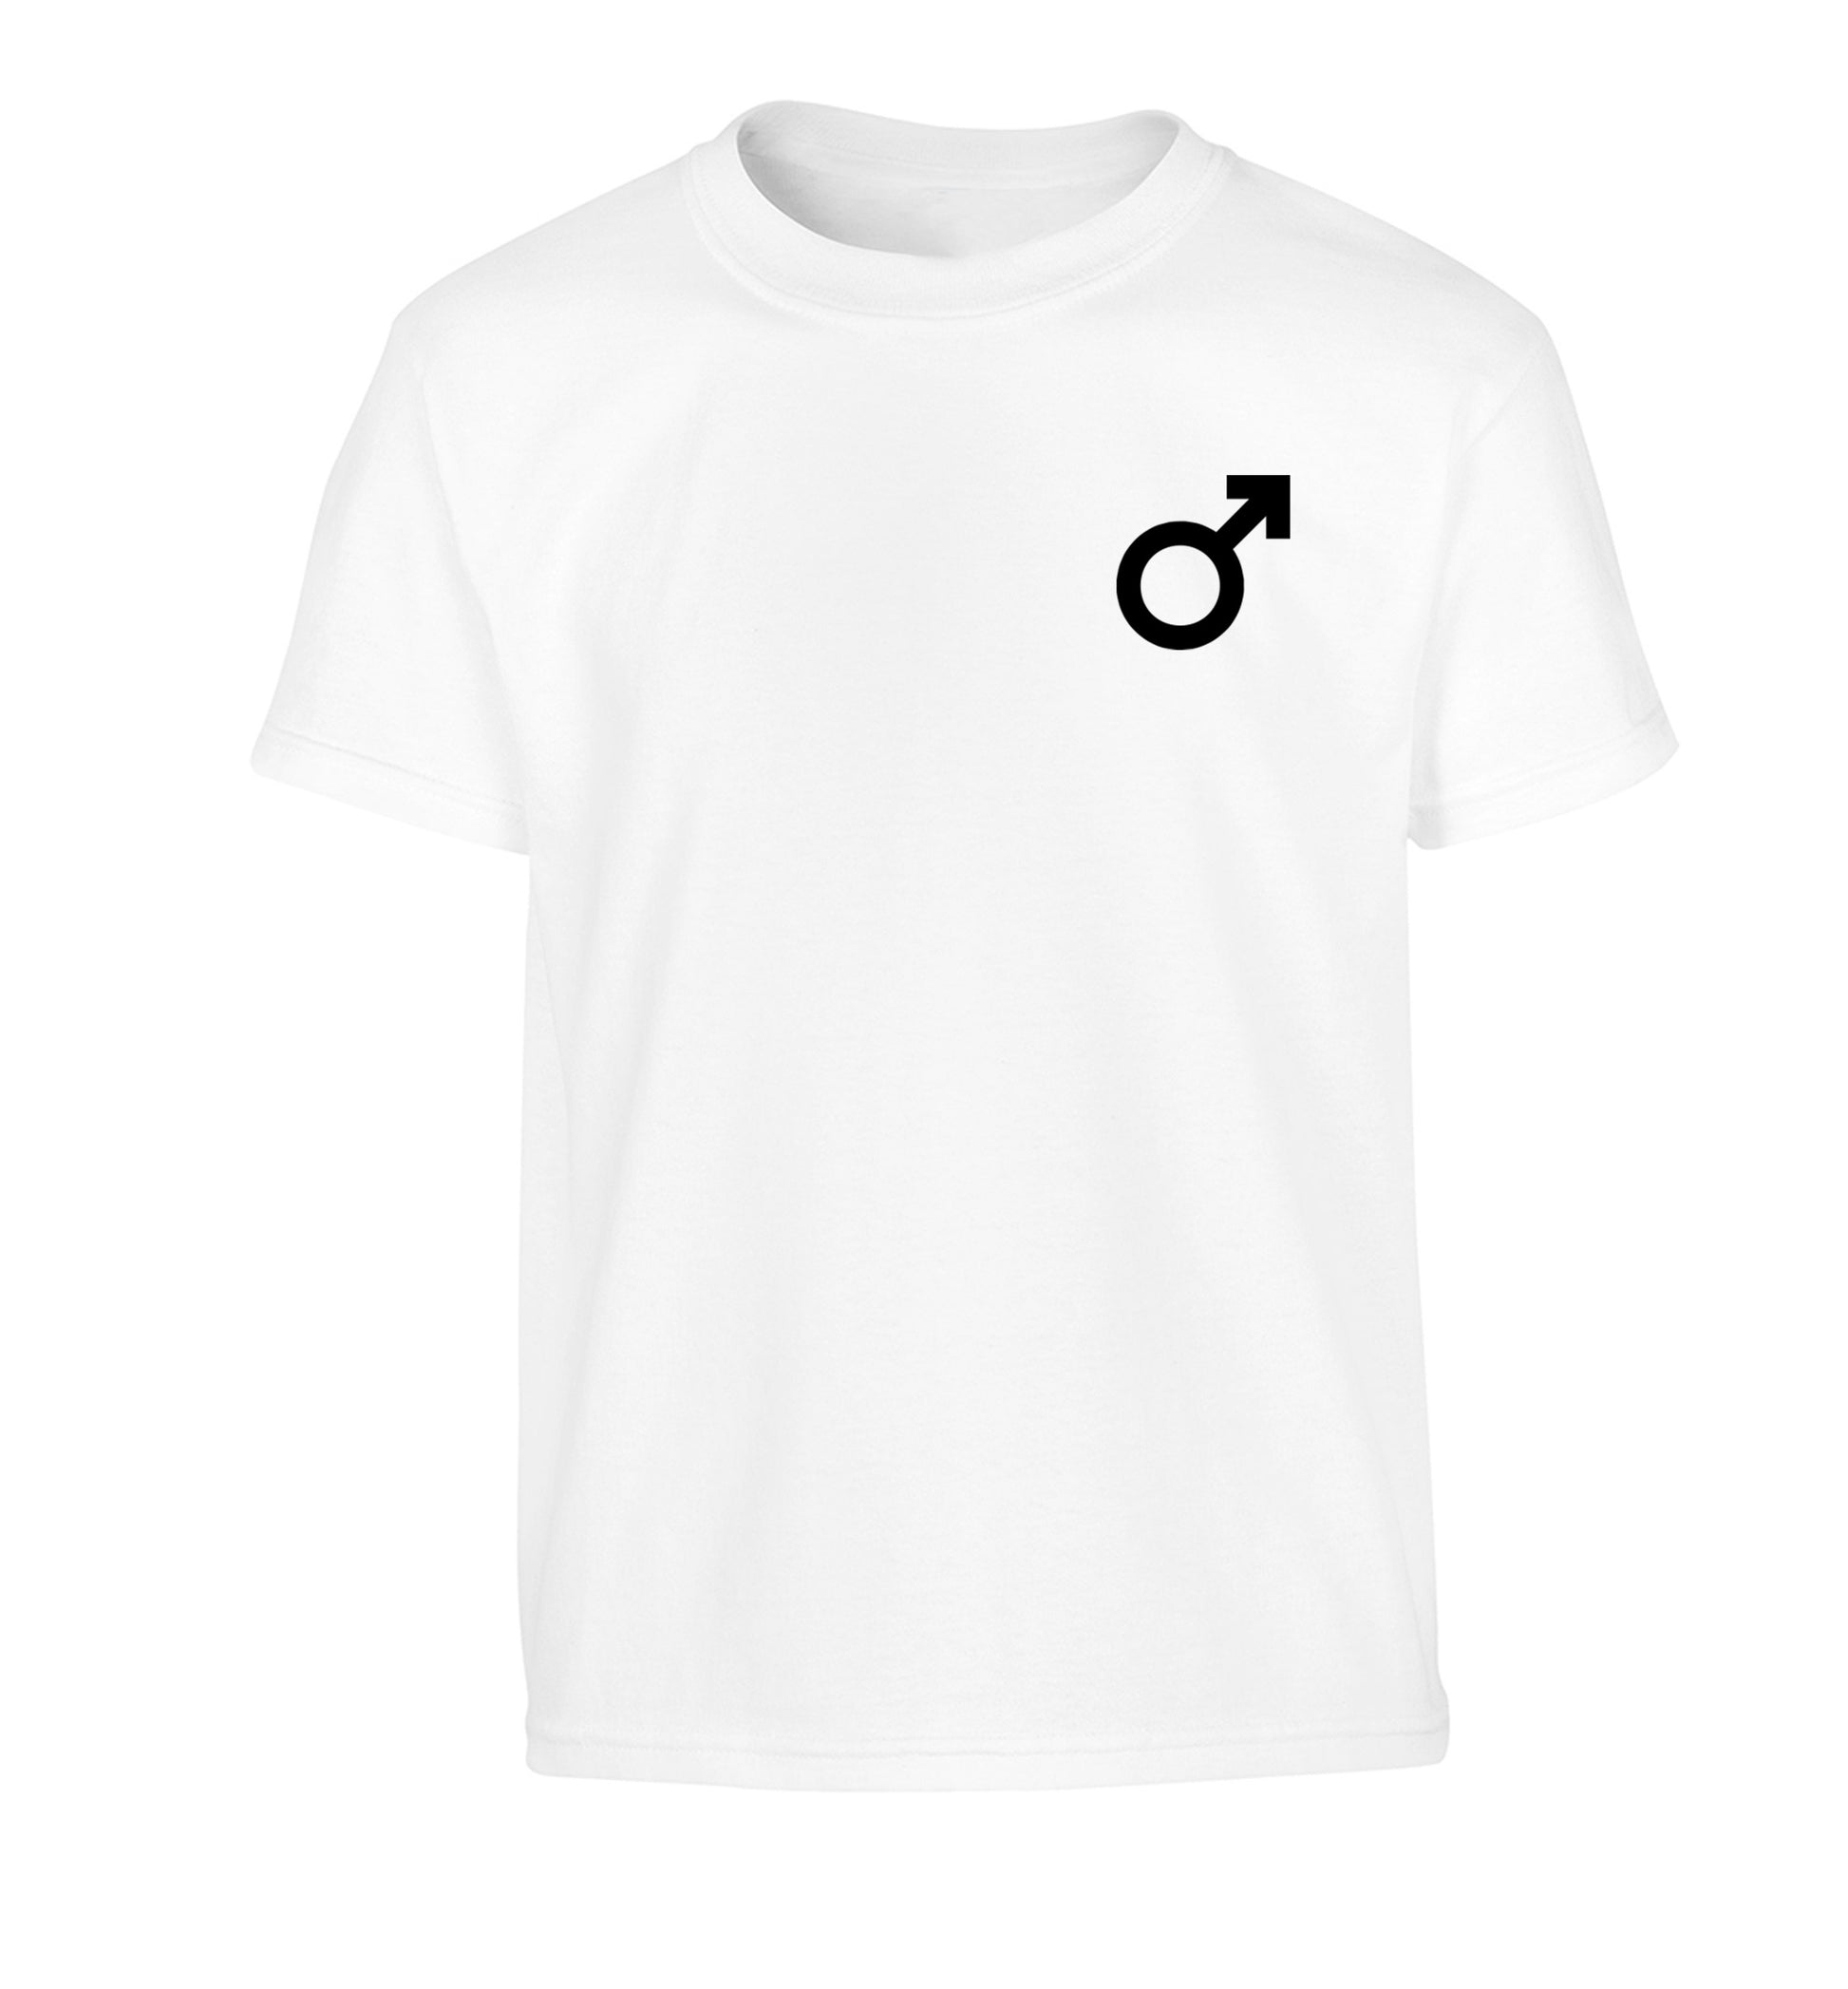 Male symbol pocket Children's white Tshirt 12-14 Years